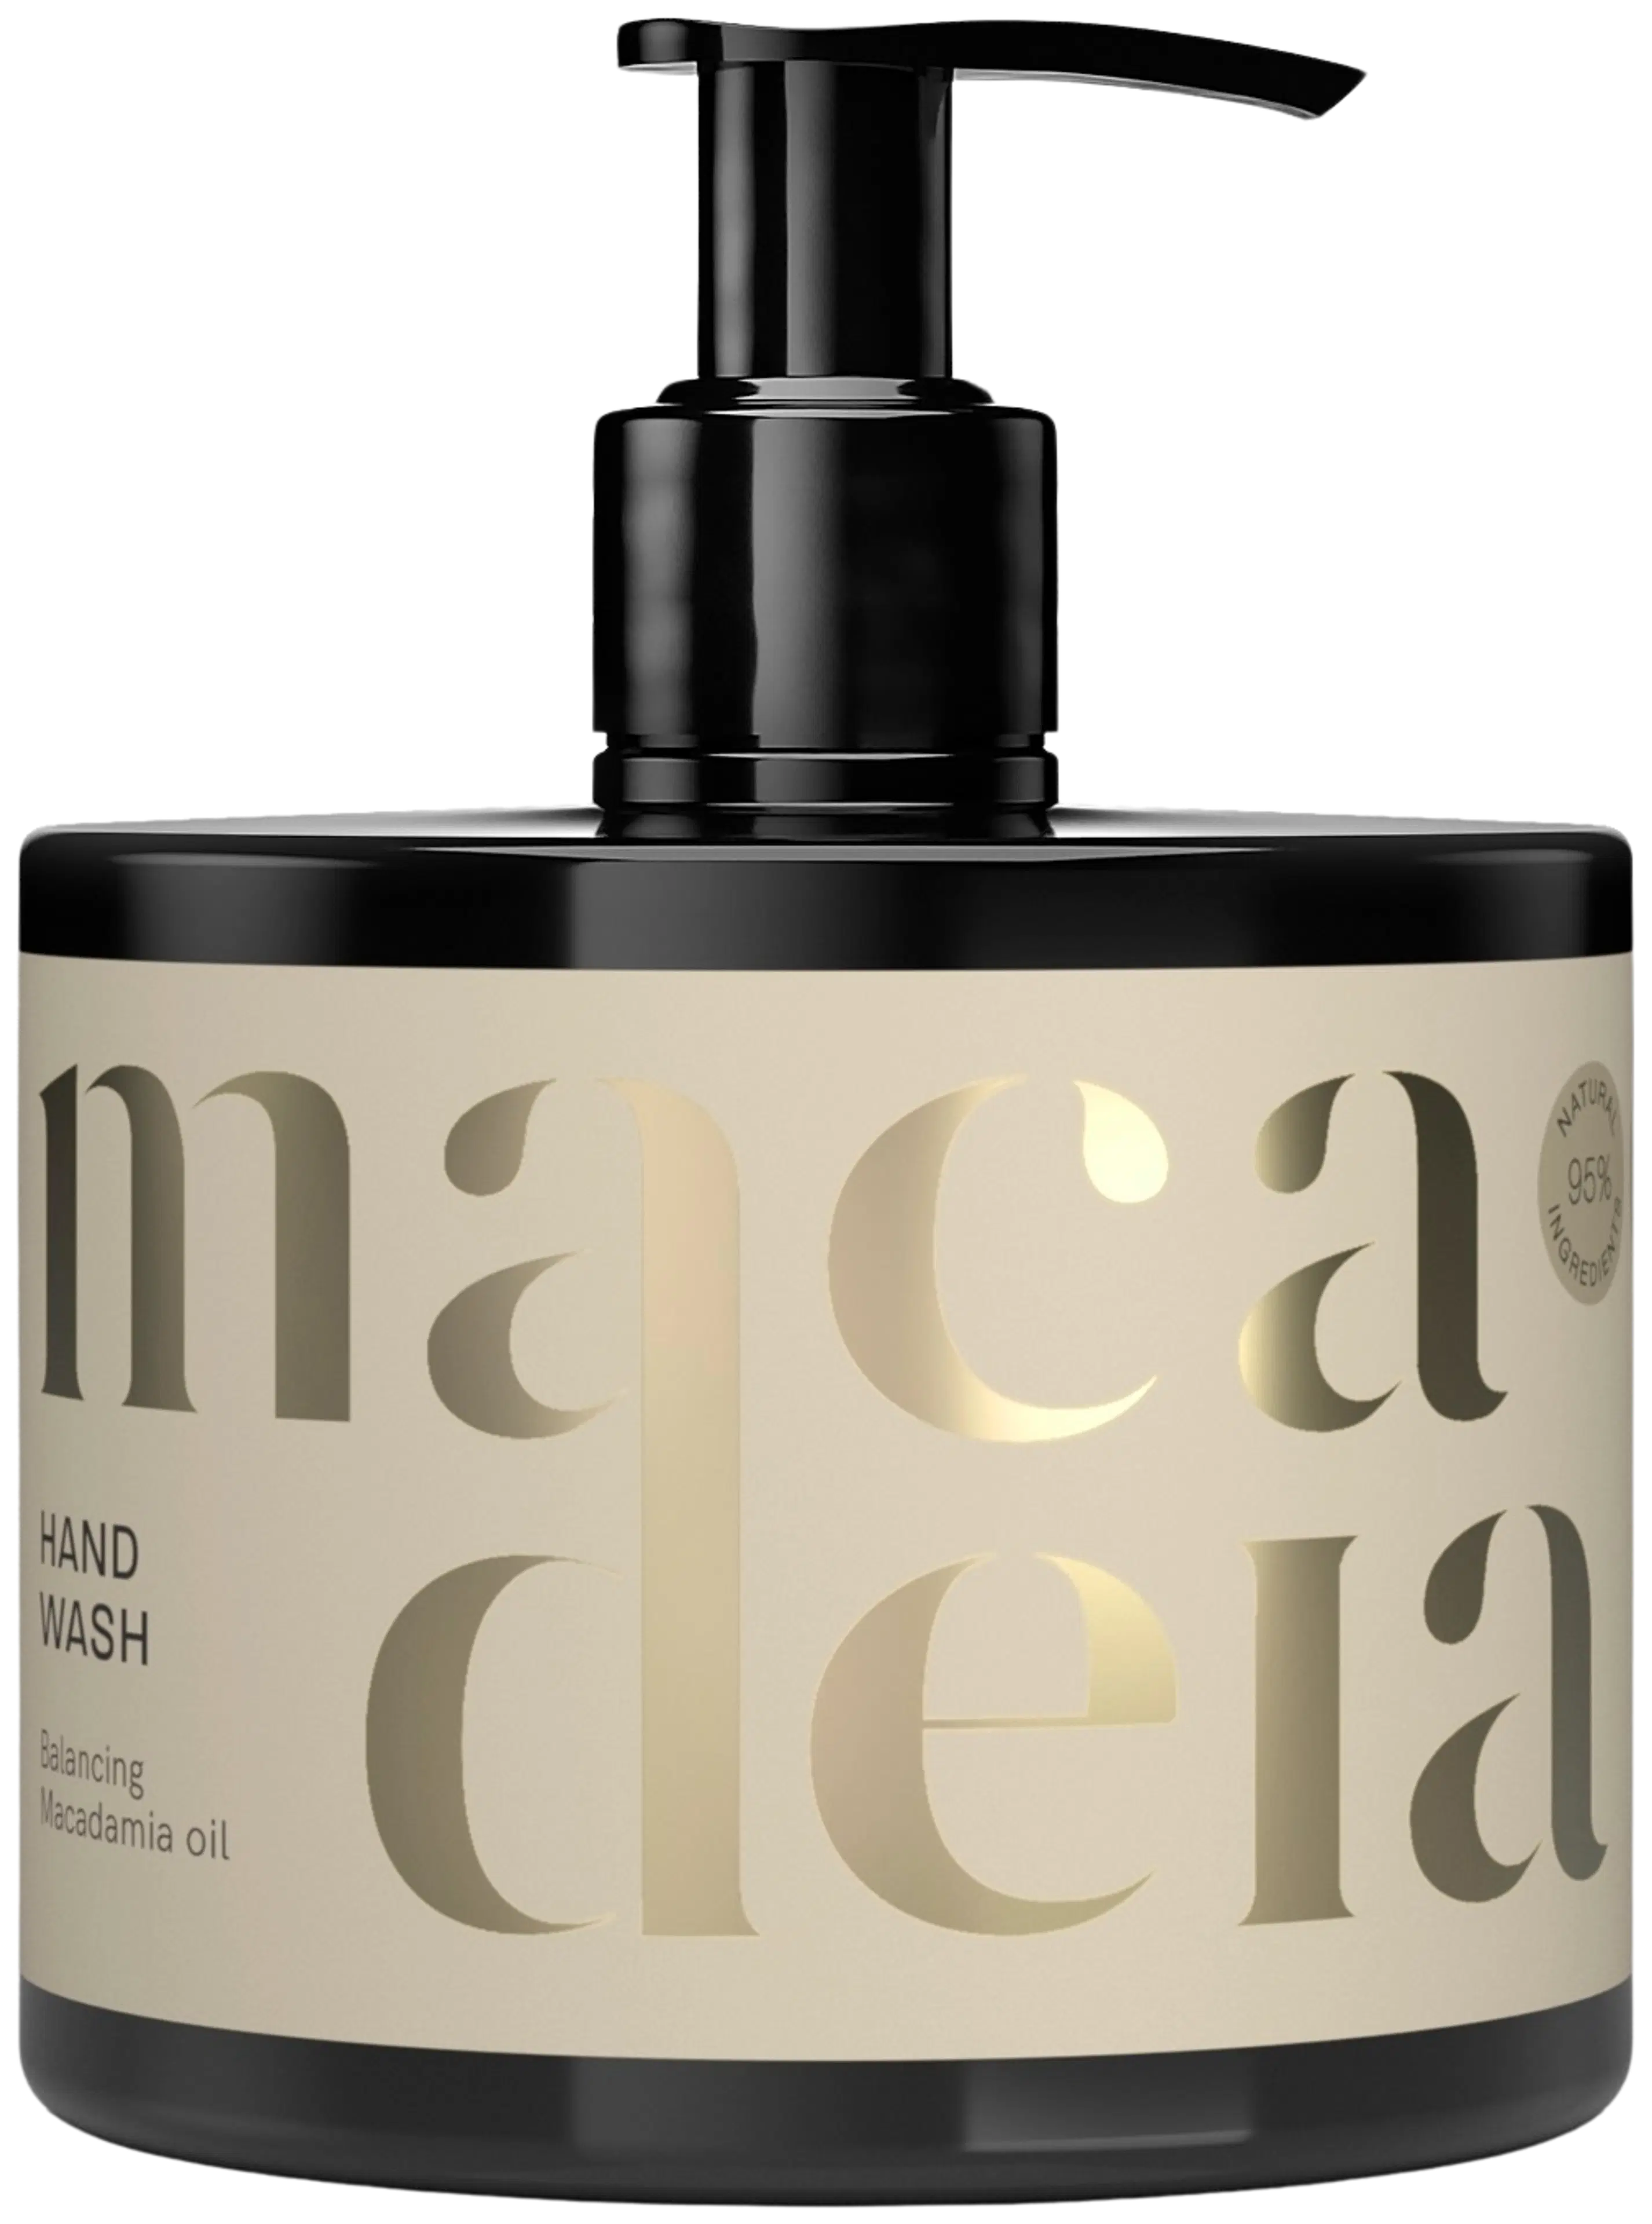 Macadeia käsisaippua 300ml Balancing Macadamia oil